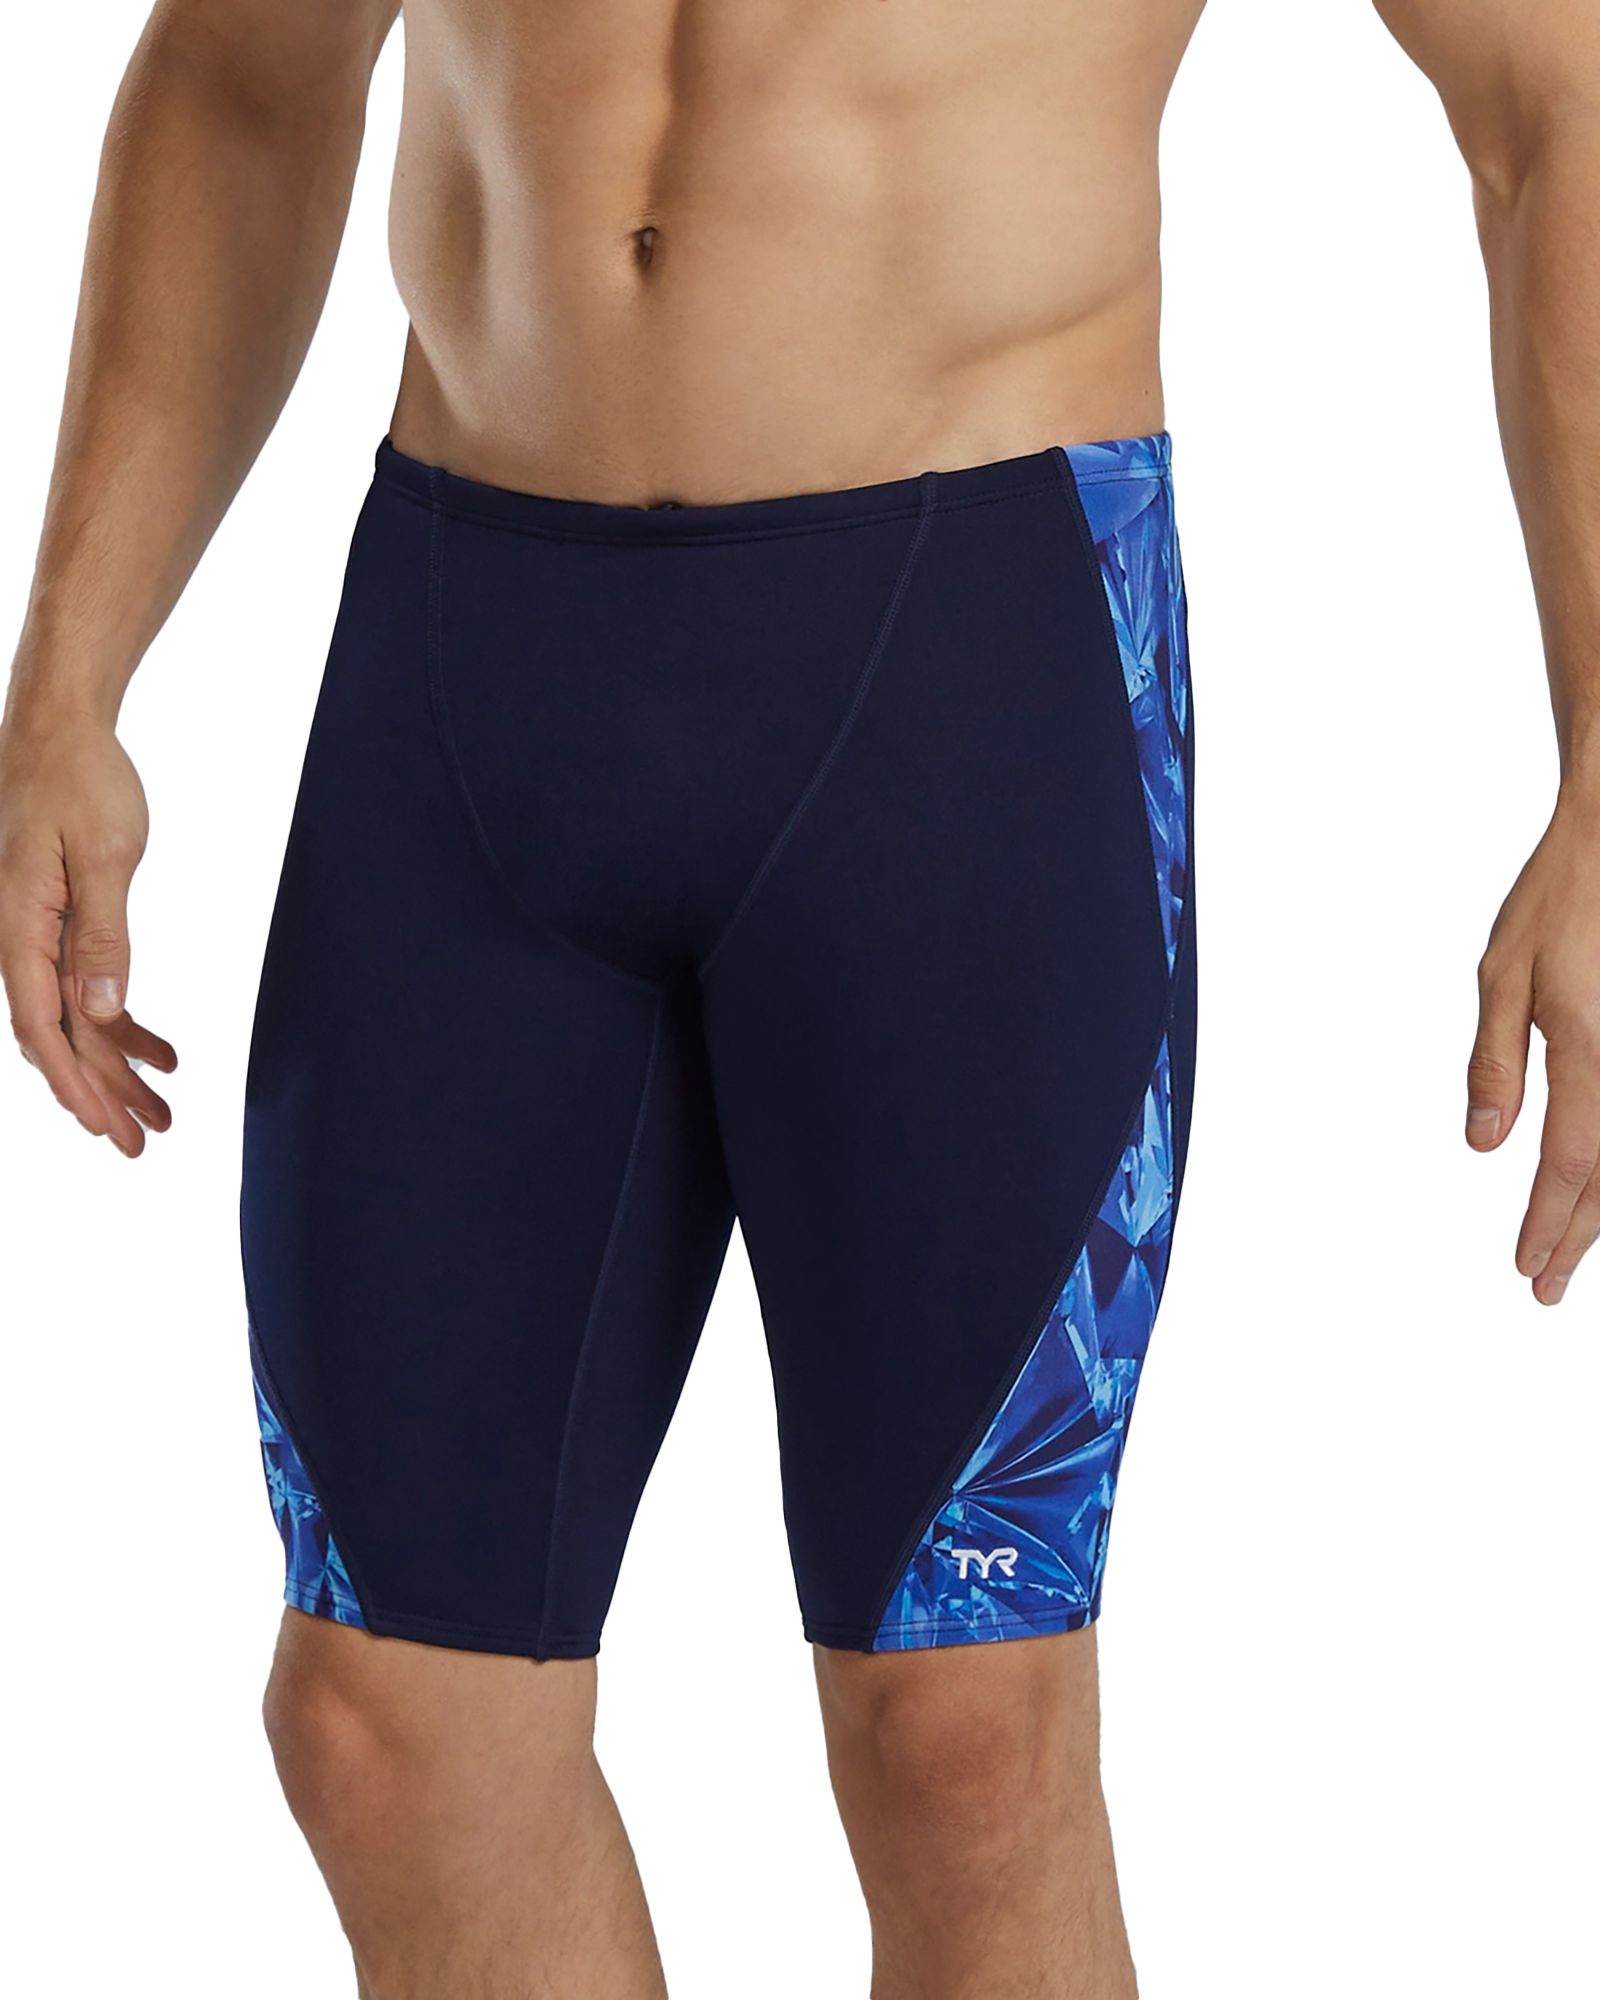 Photos - Swimwear TYR Men's Durafast Eliste Crystalized Jammer Swimsuit, Size 36, Blue 23TYR 